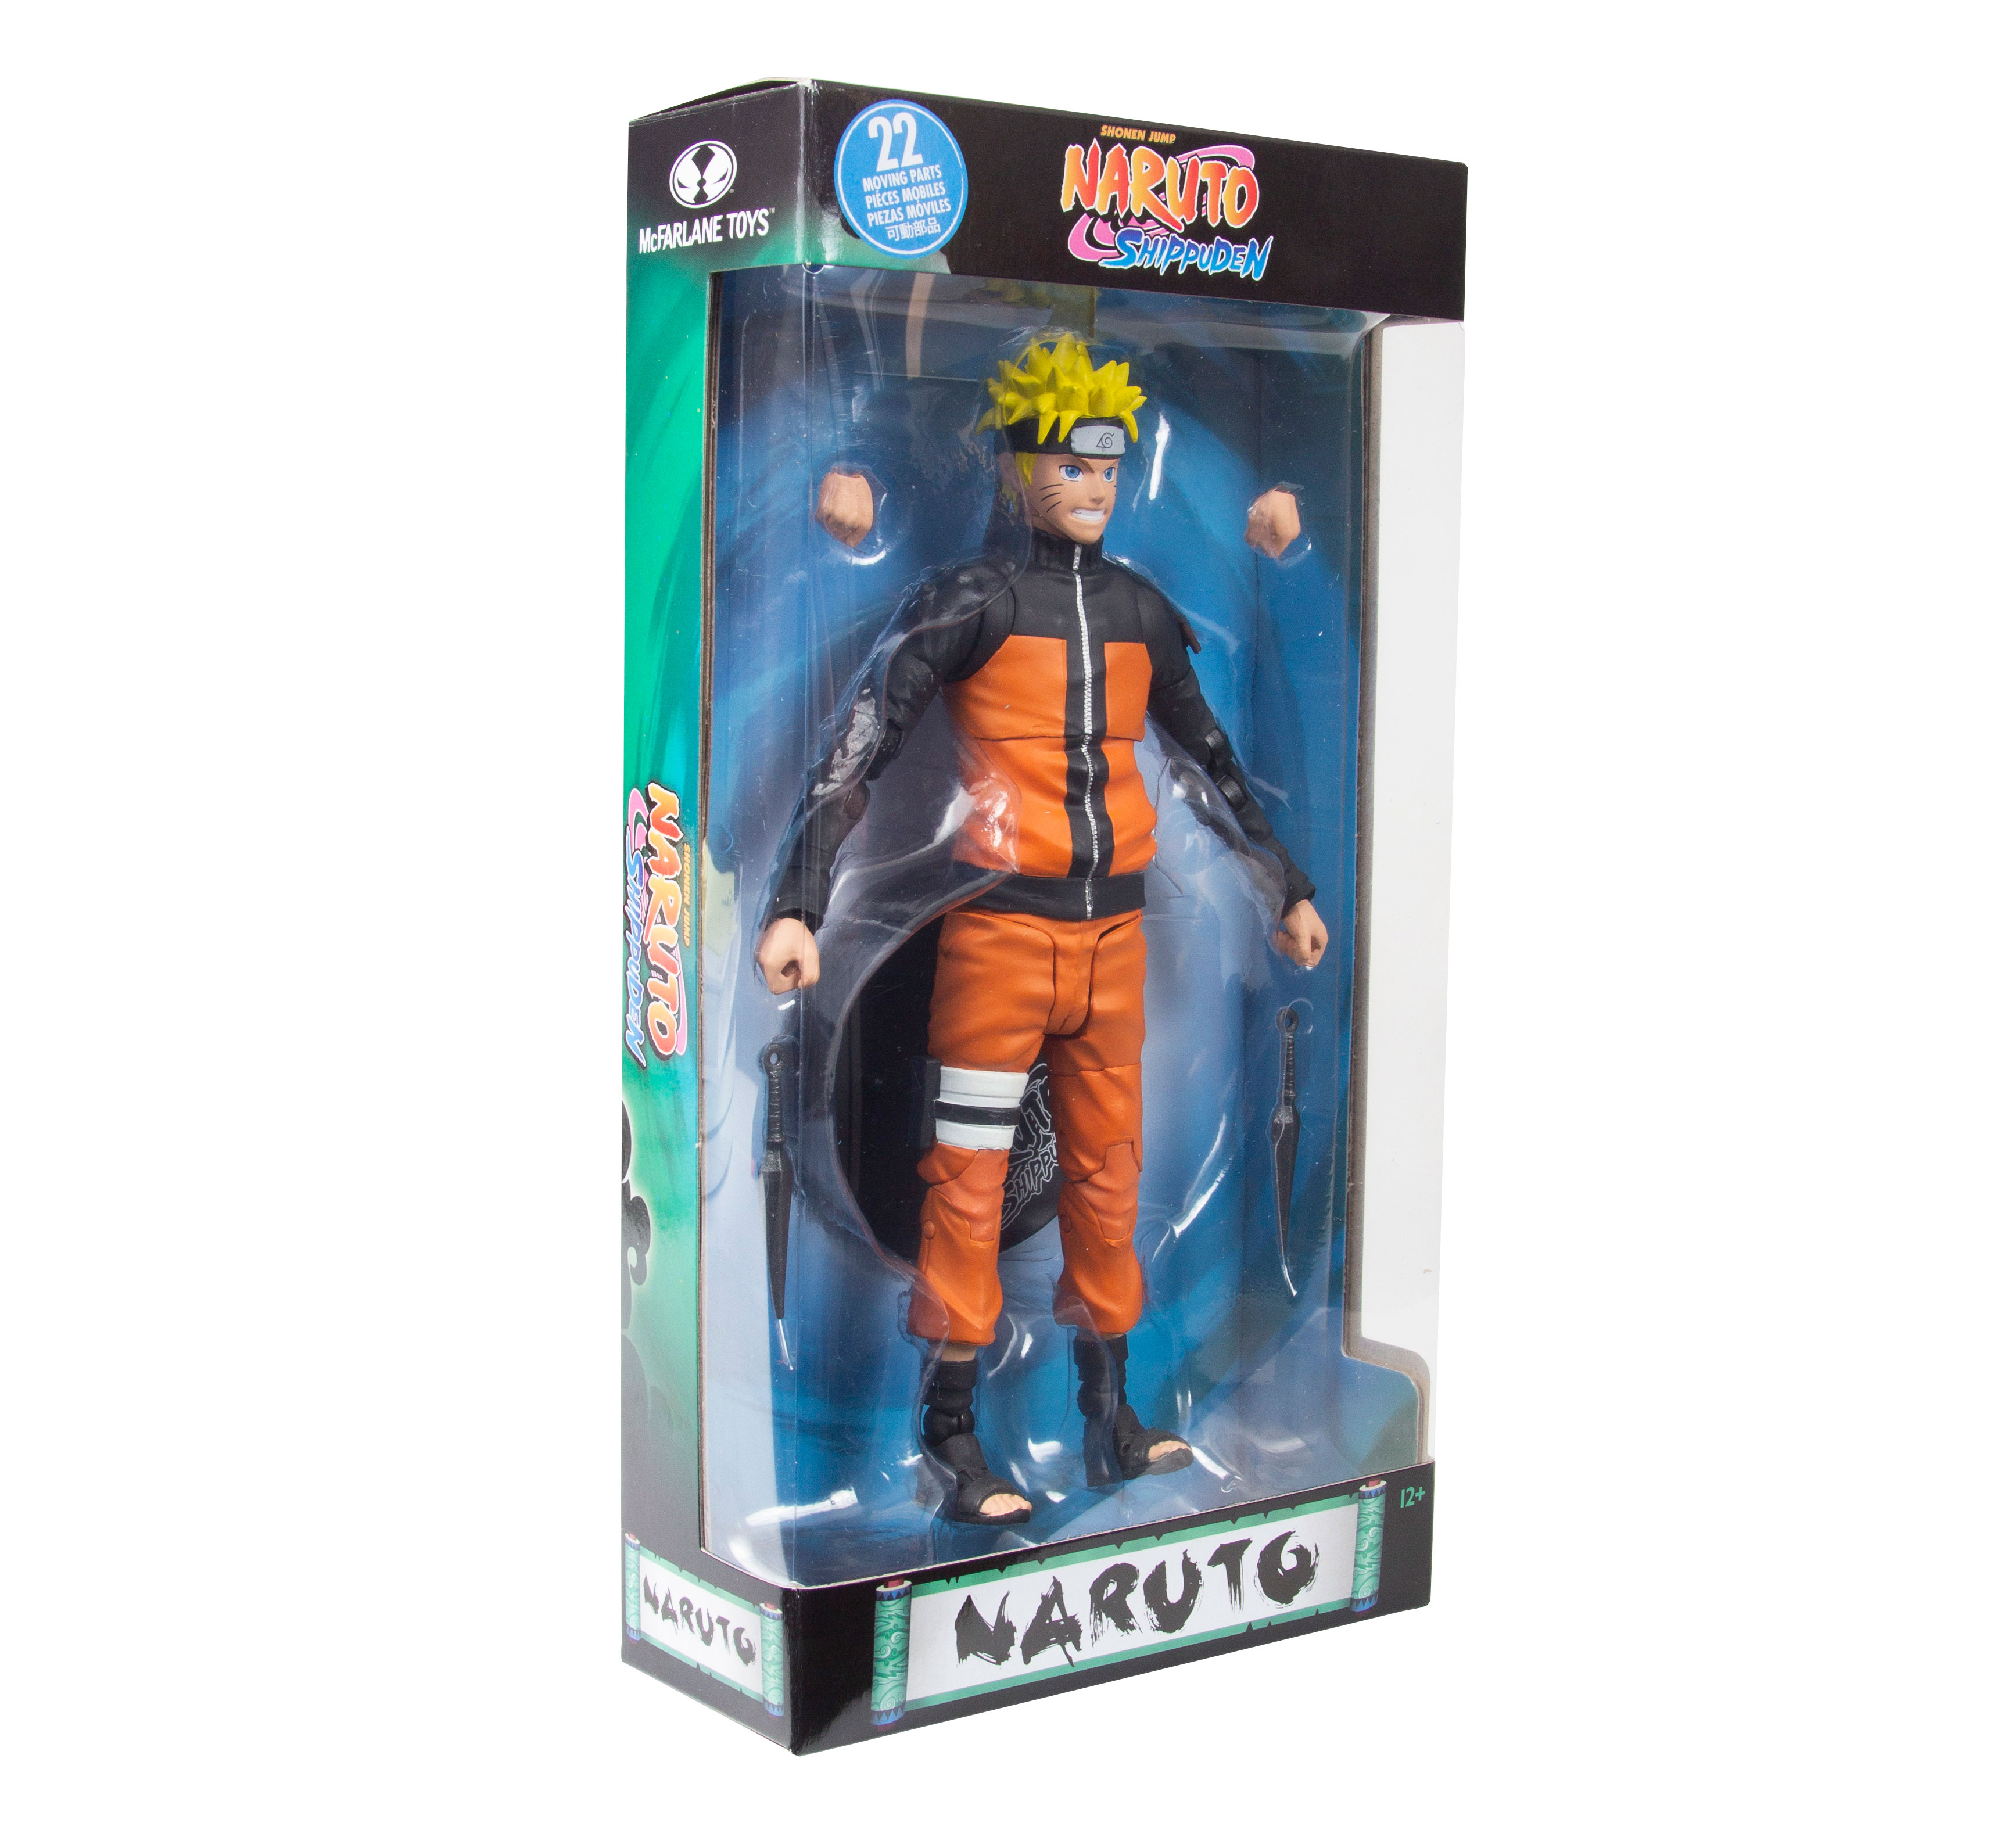 Naruto Shonen Jump Shippuden Naruto Mcfarlane Toys Action Figure NEW 